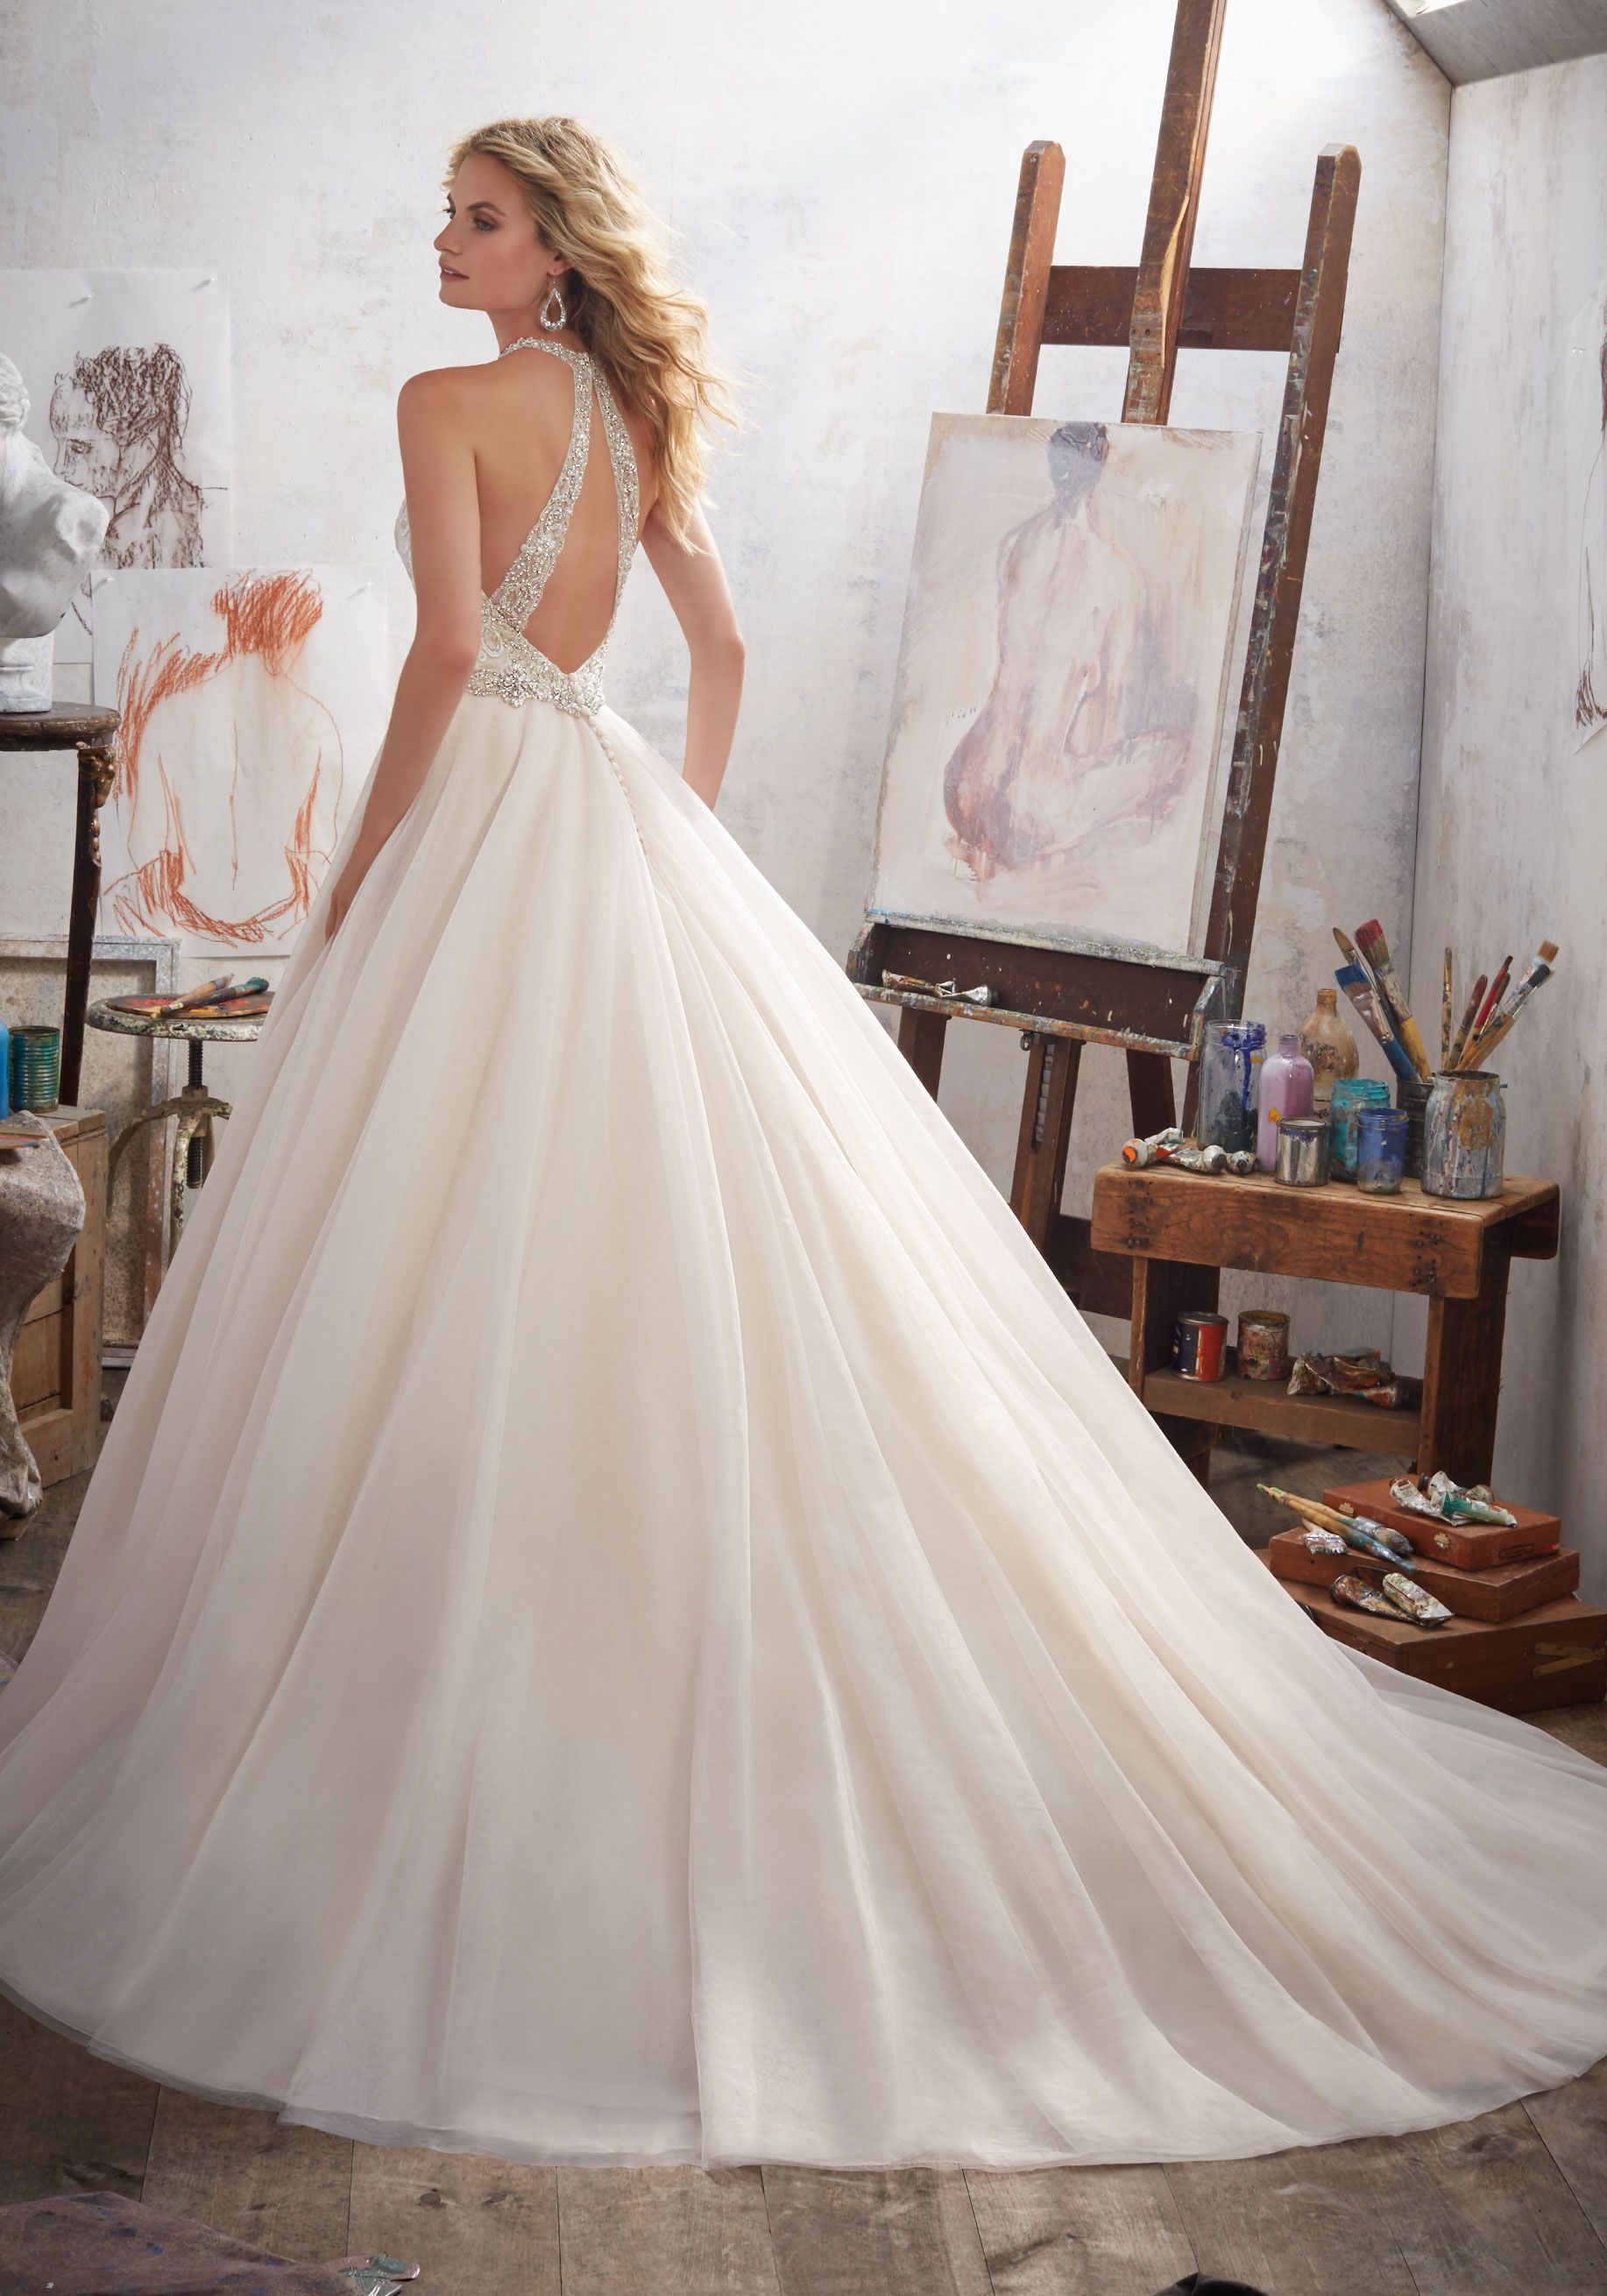 Margarita wedding dress by Morilee